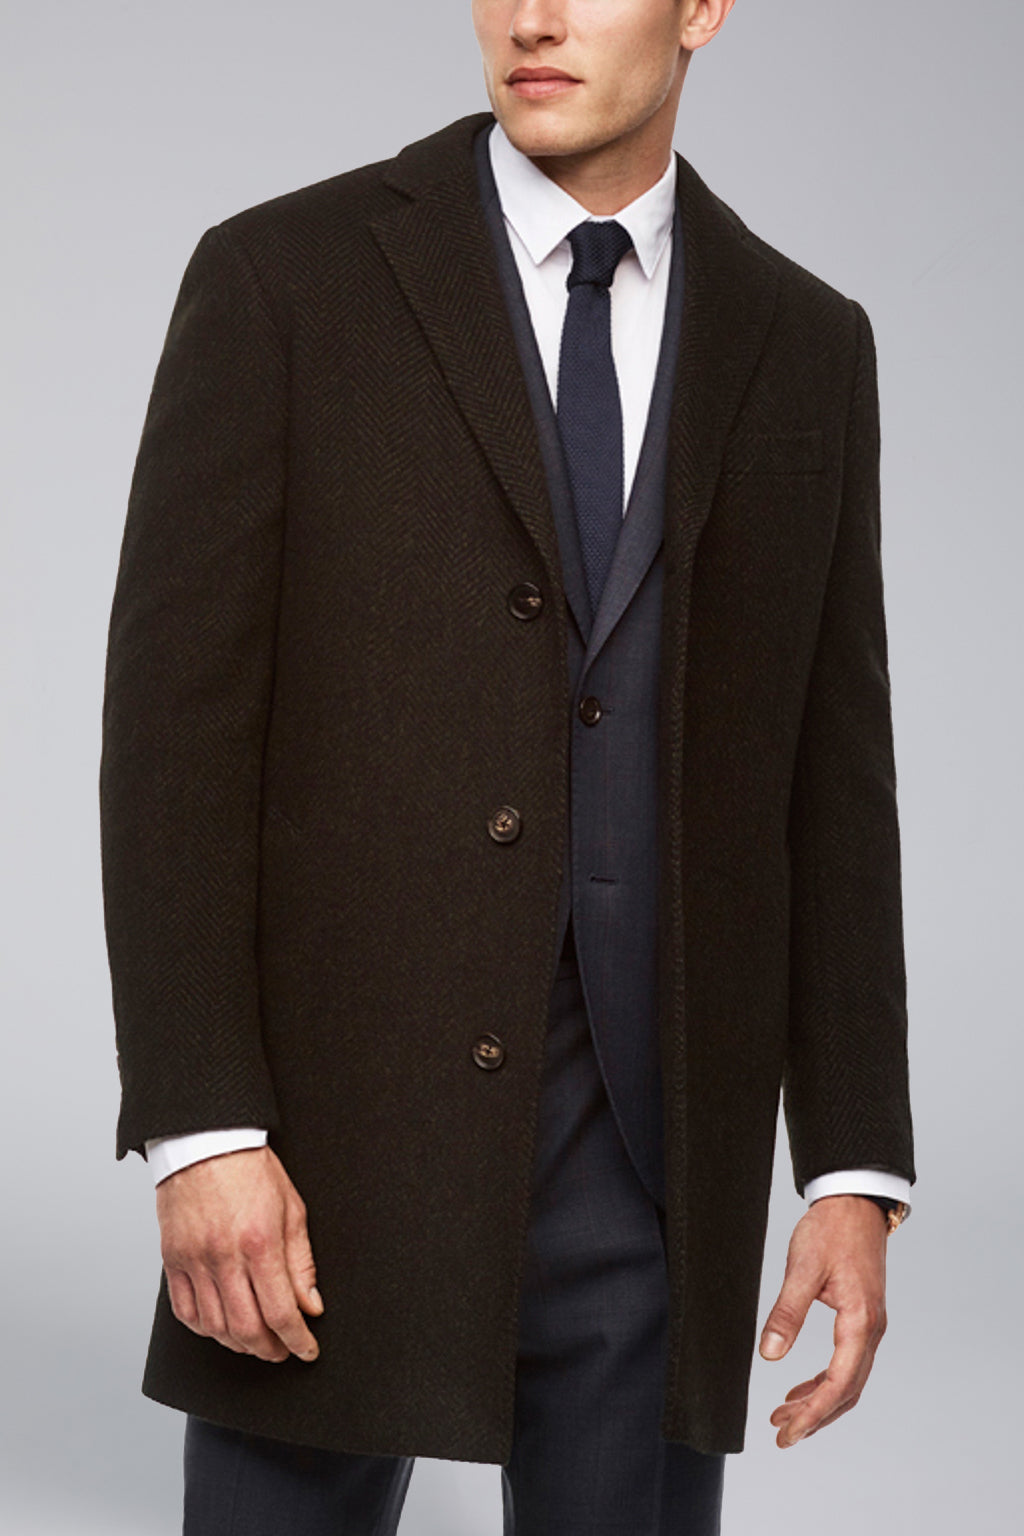 Stone Slim Fit Wool & Cashmere Overcoat - Navy-Olive Herringbone